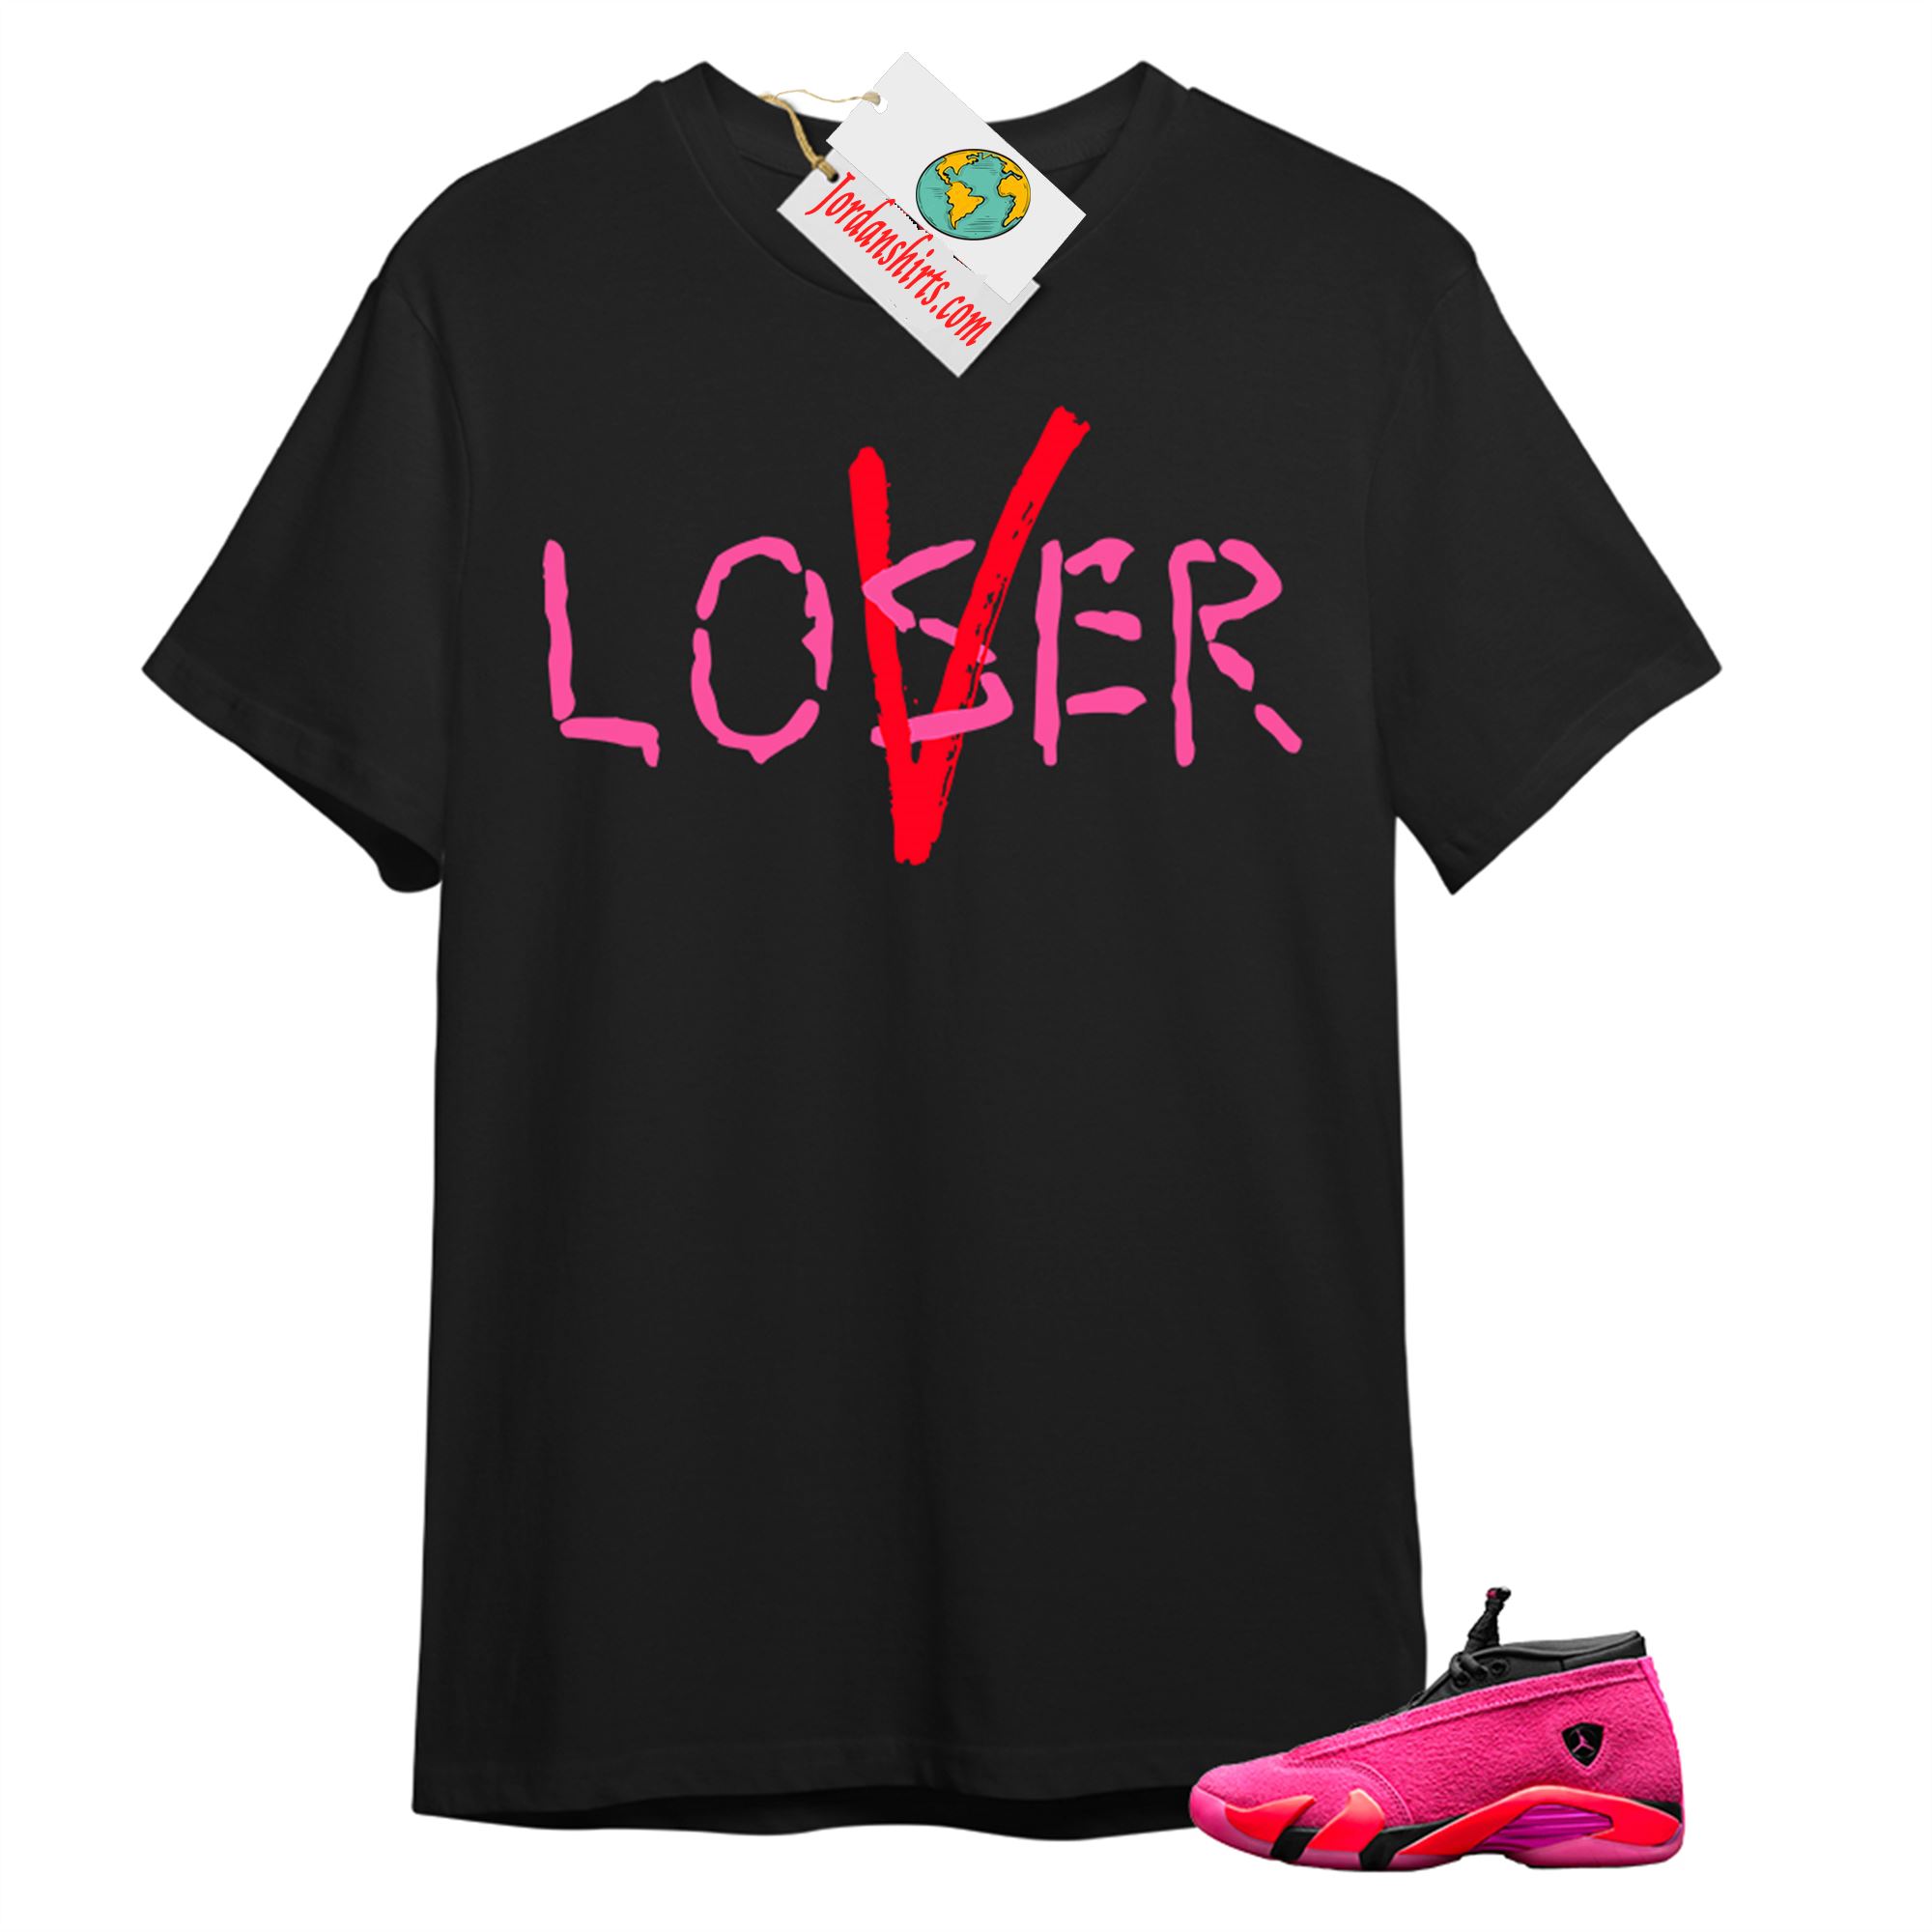 Jordan 14 Shirt, Love A Loser Black T-shirt Air Jordan 14 Wmns Shocking Pink 14s Size Up To 5xl